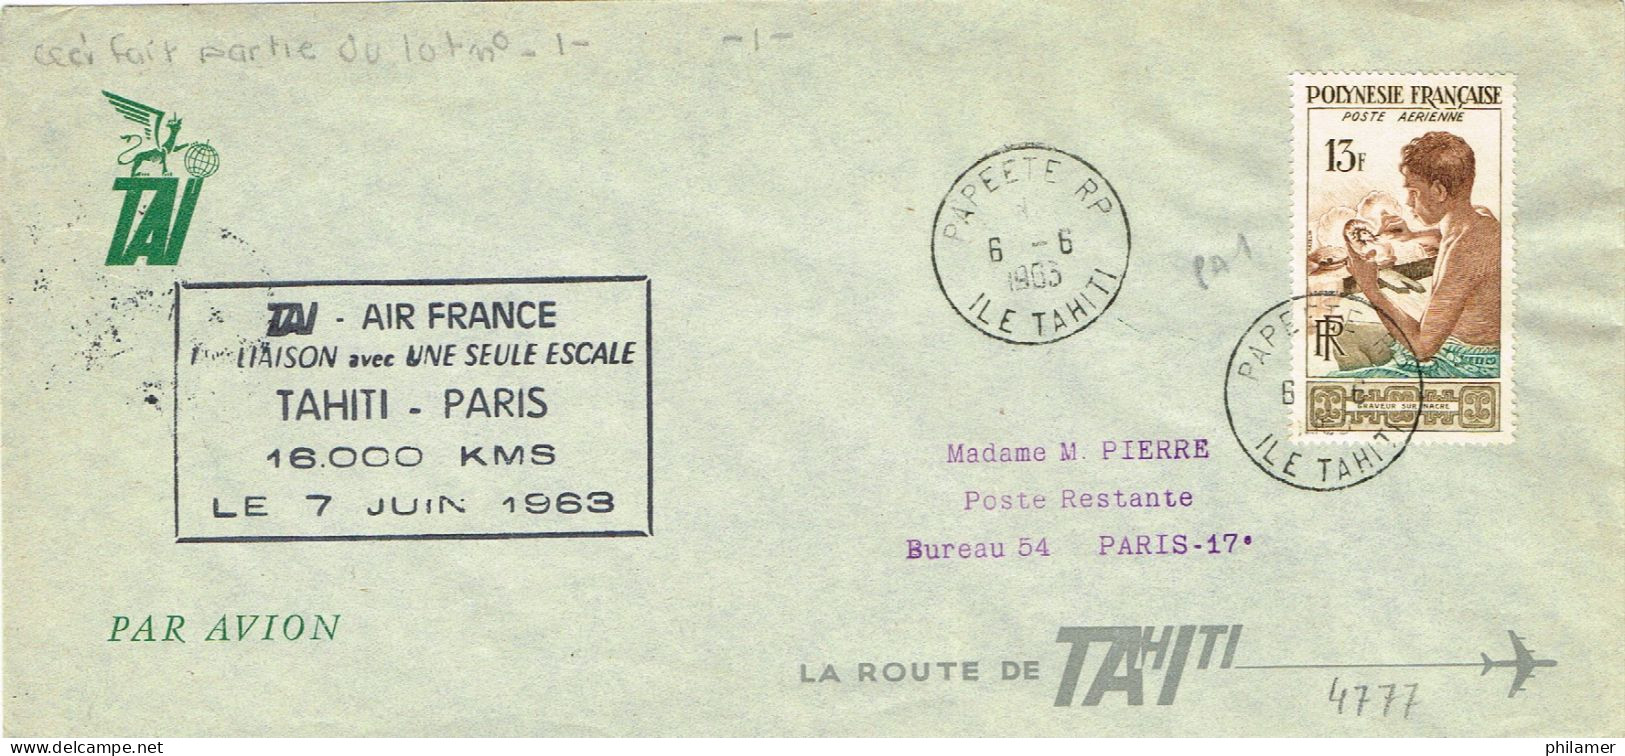 Polynesie Francaise French Polynesia FFC Premier Vol Aerien Air France Tahiti Paris 7/6/63 BE - Covers & Documents